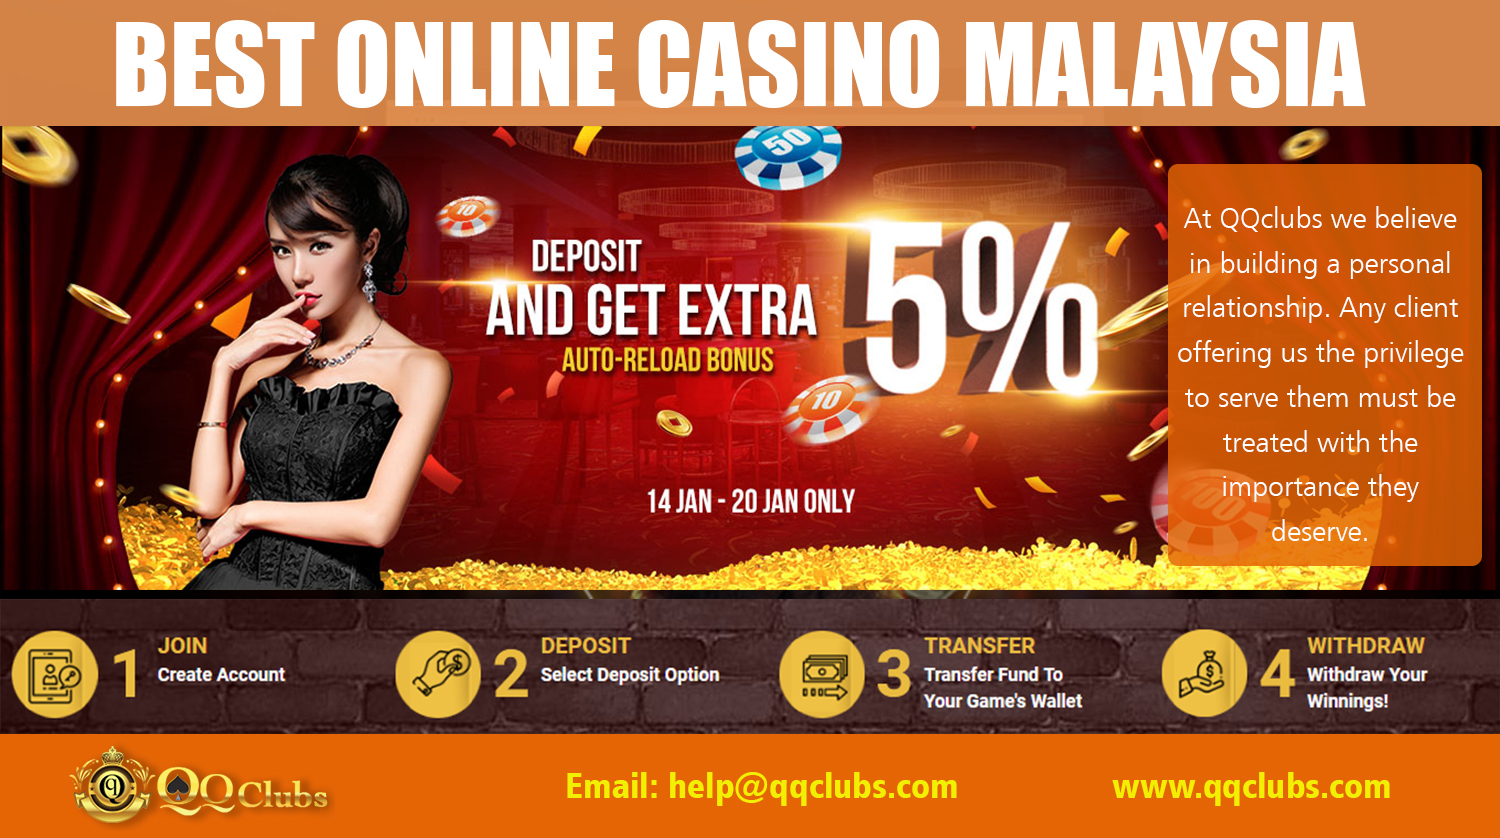 Online casino malaysia ranking temata вход для партнеров рох казино